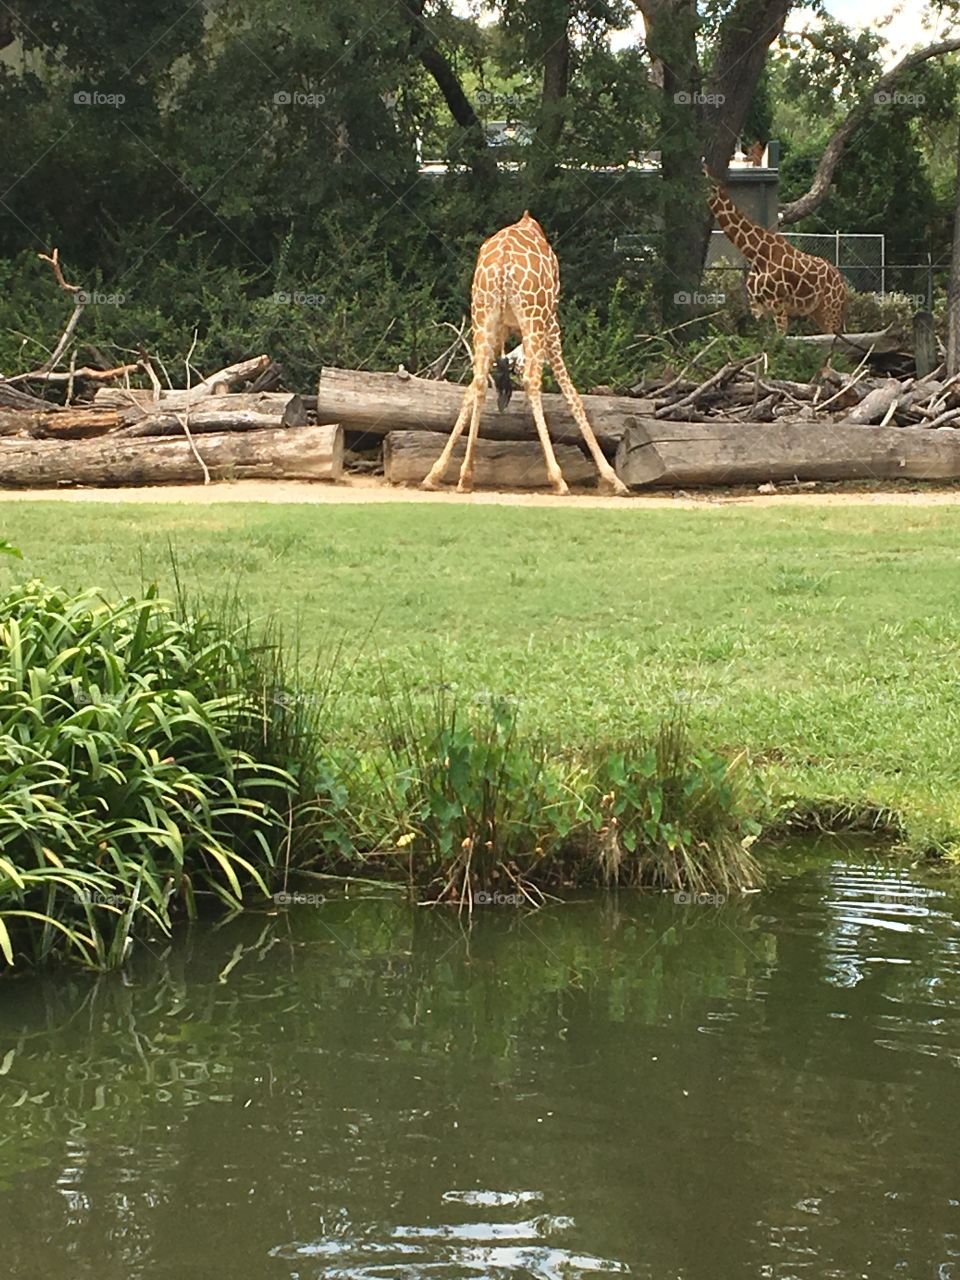 Giraffe at Fort Worth zoo